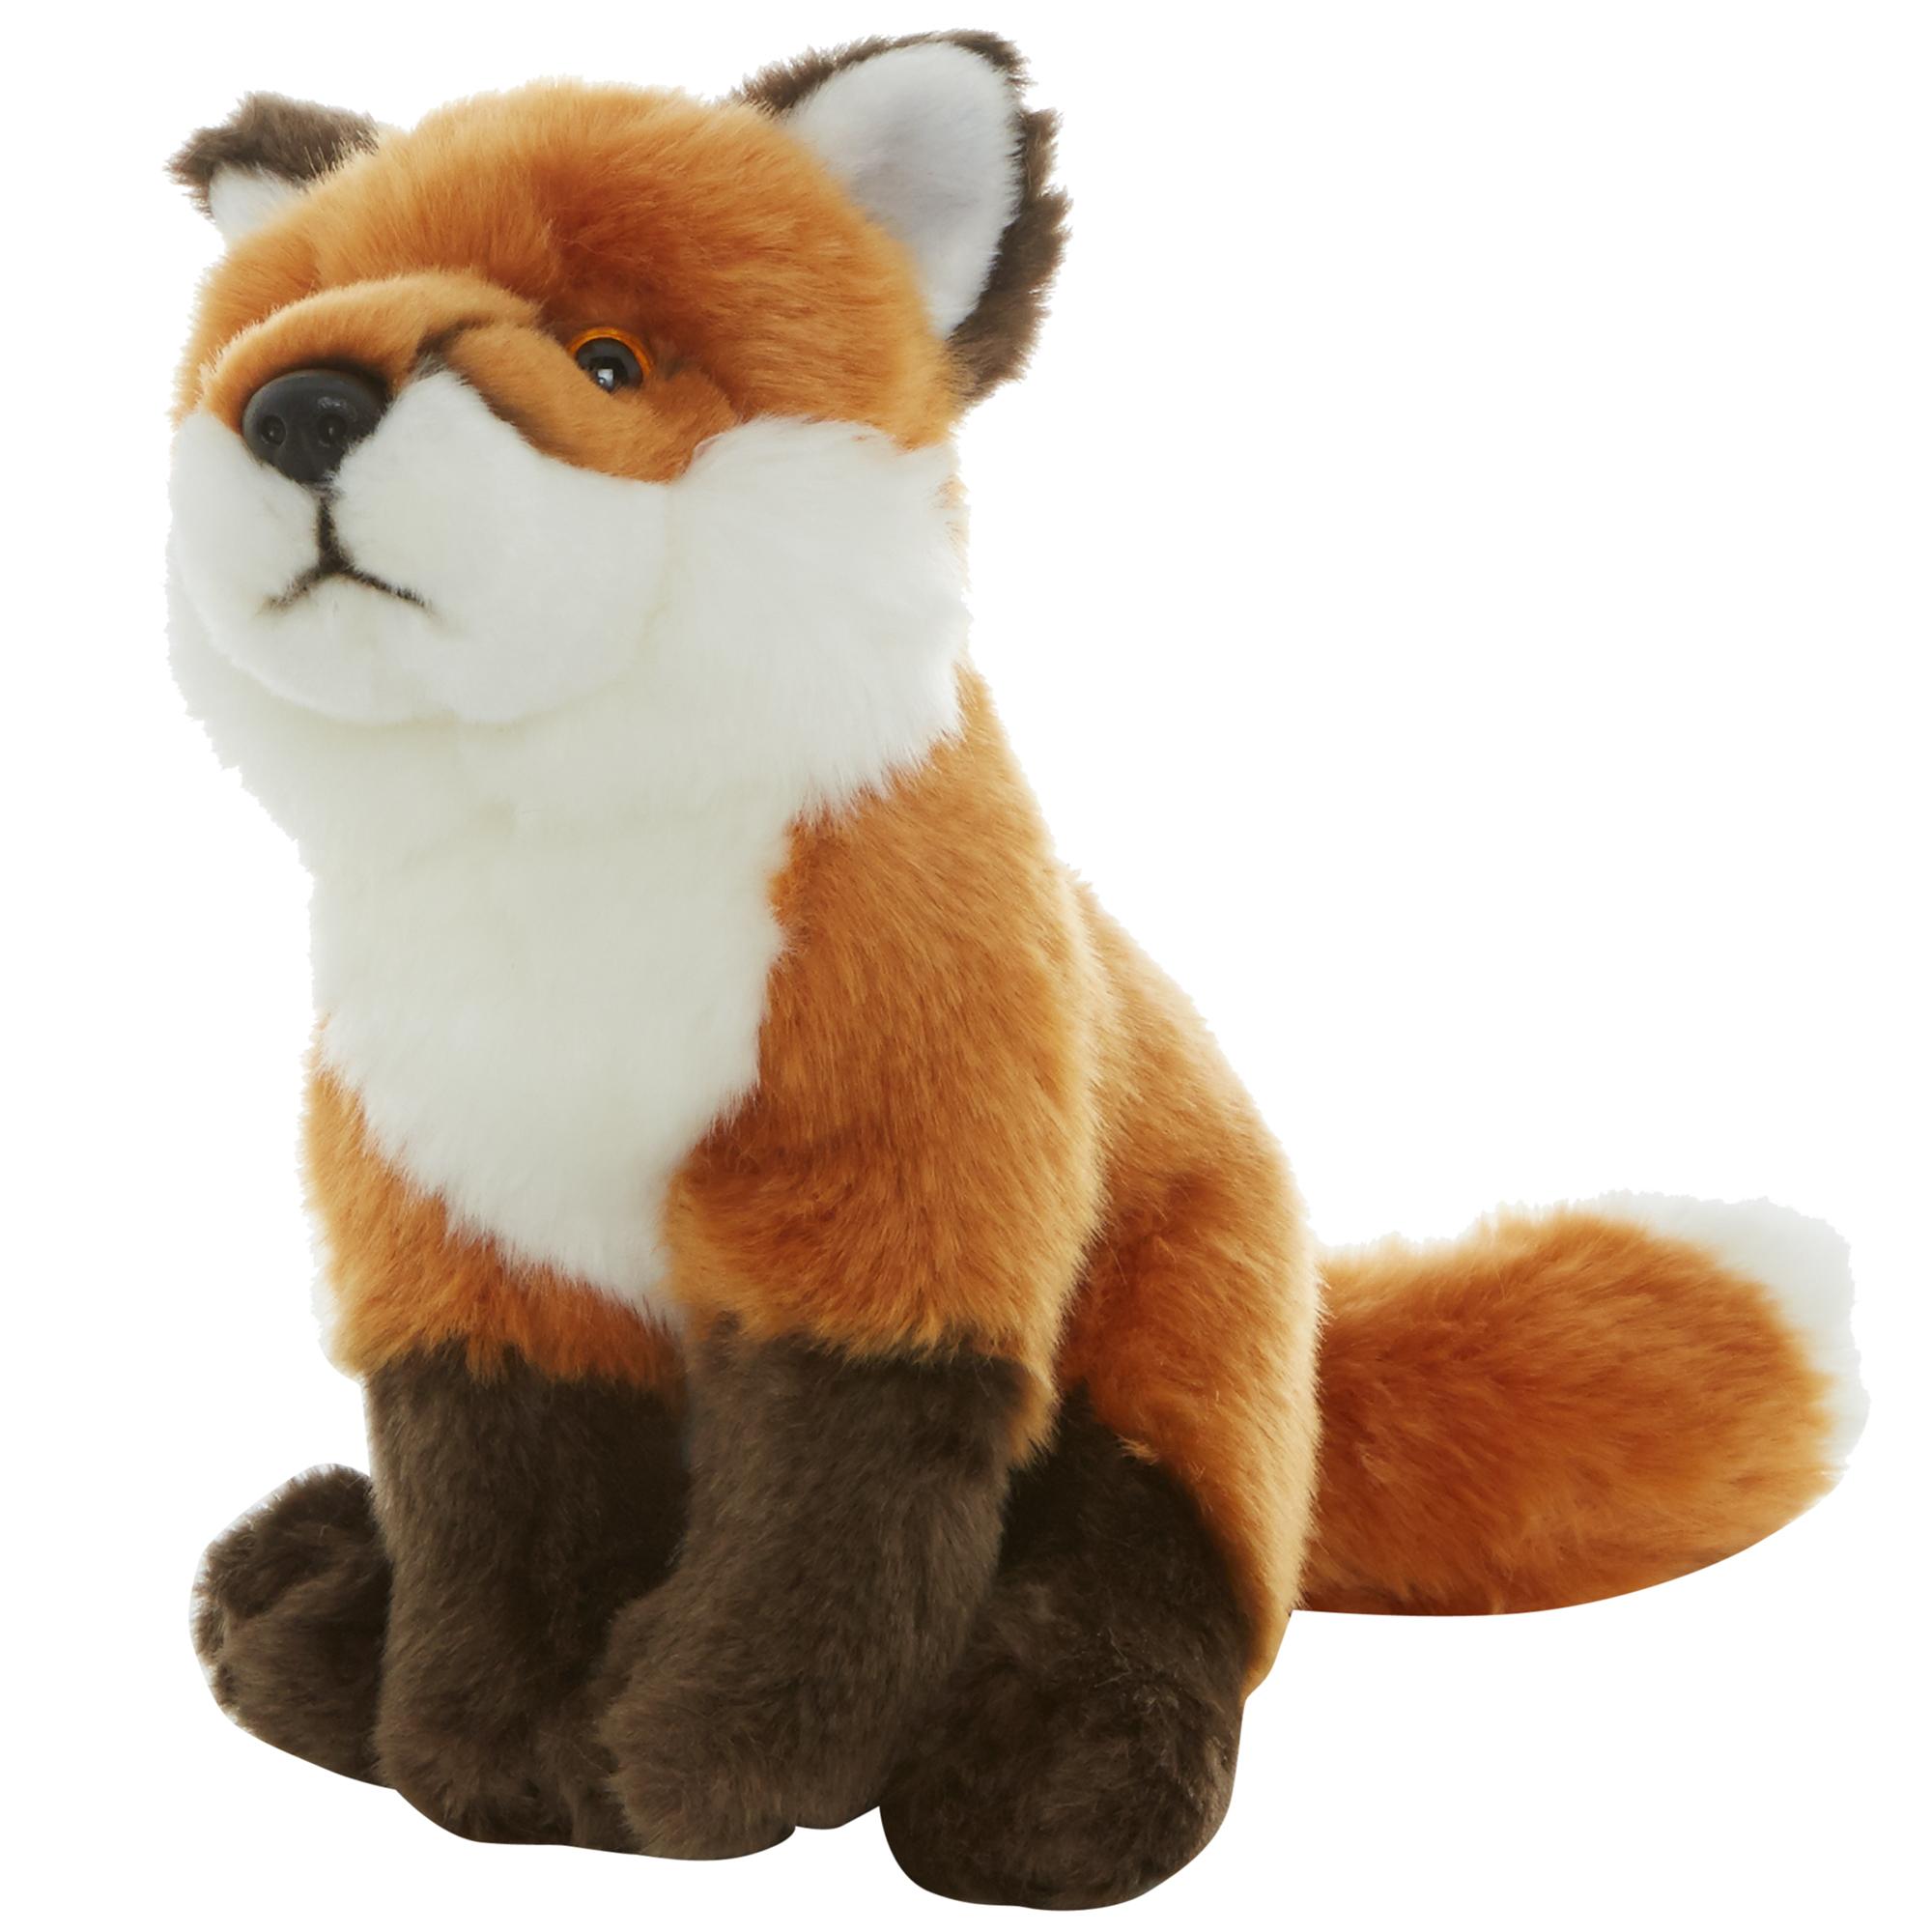 Hamleys Fox Soft Toy - £15.00 - Hamleys for Toys and Games